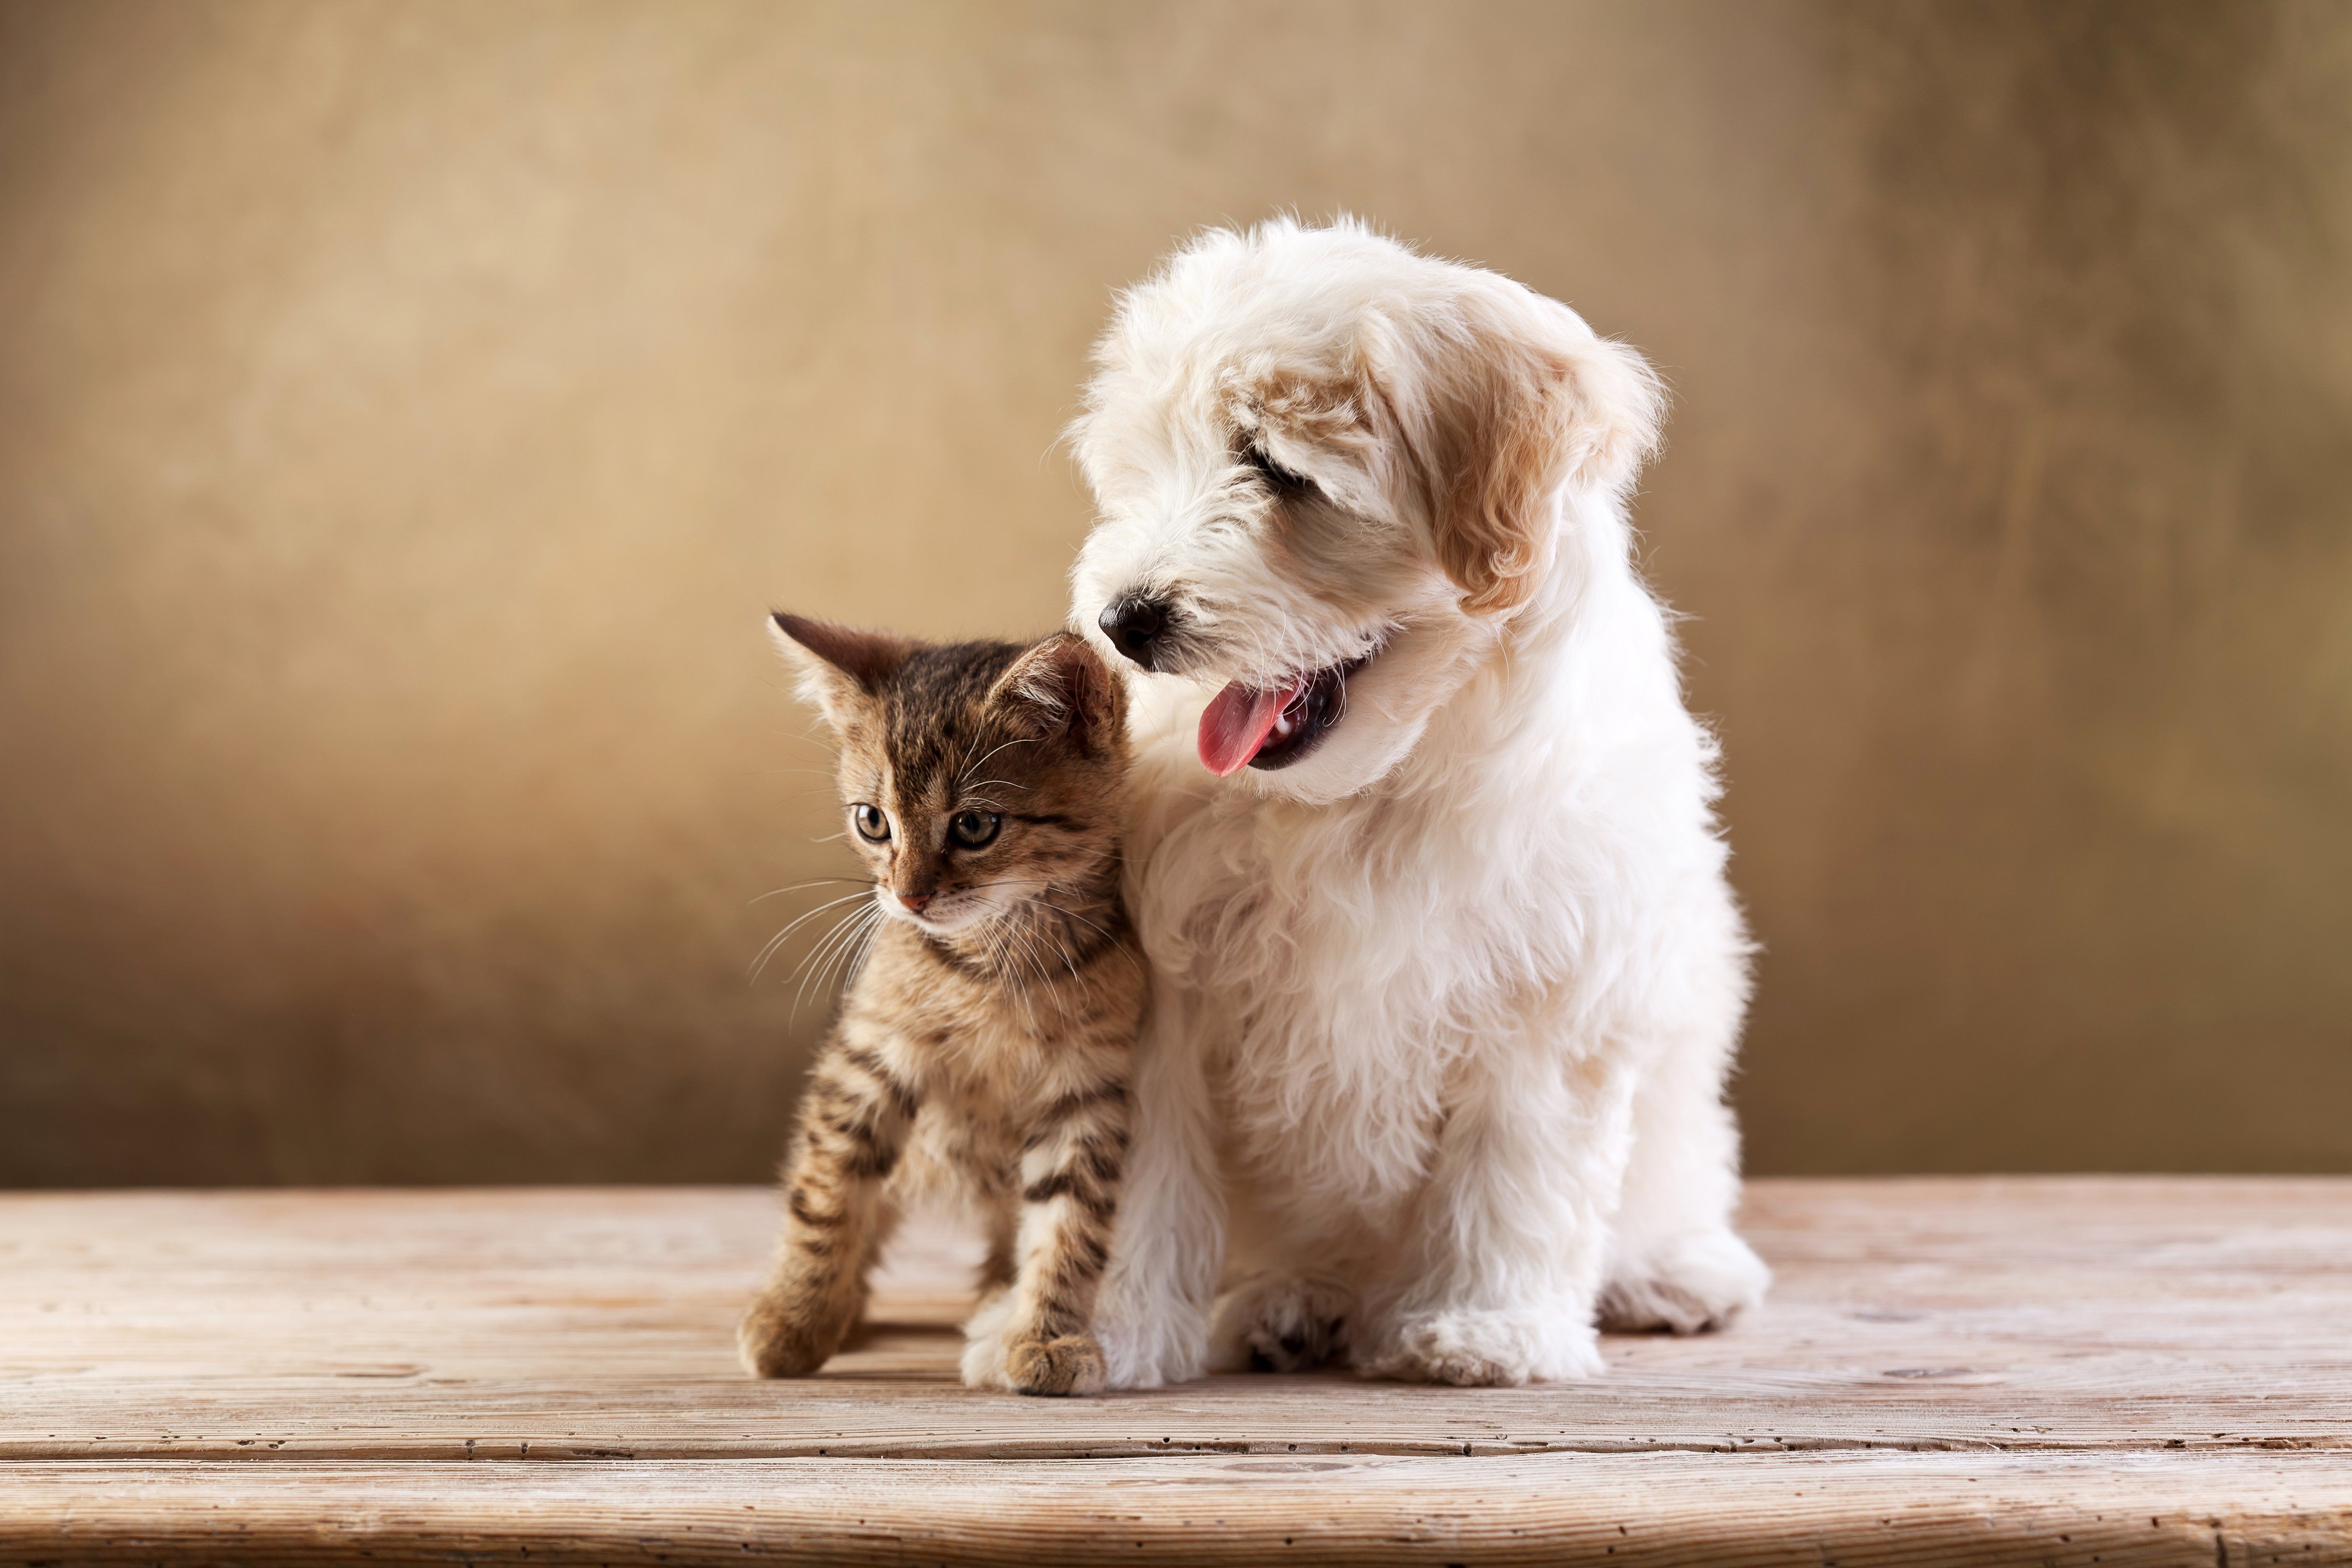 Kitten And Puppy Wallpaper Desktop For Desktop Wallpaper And Cat Stock, Download Wallpaper